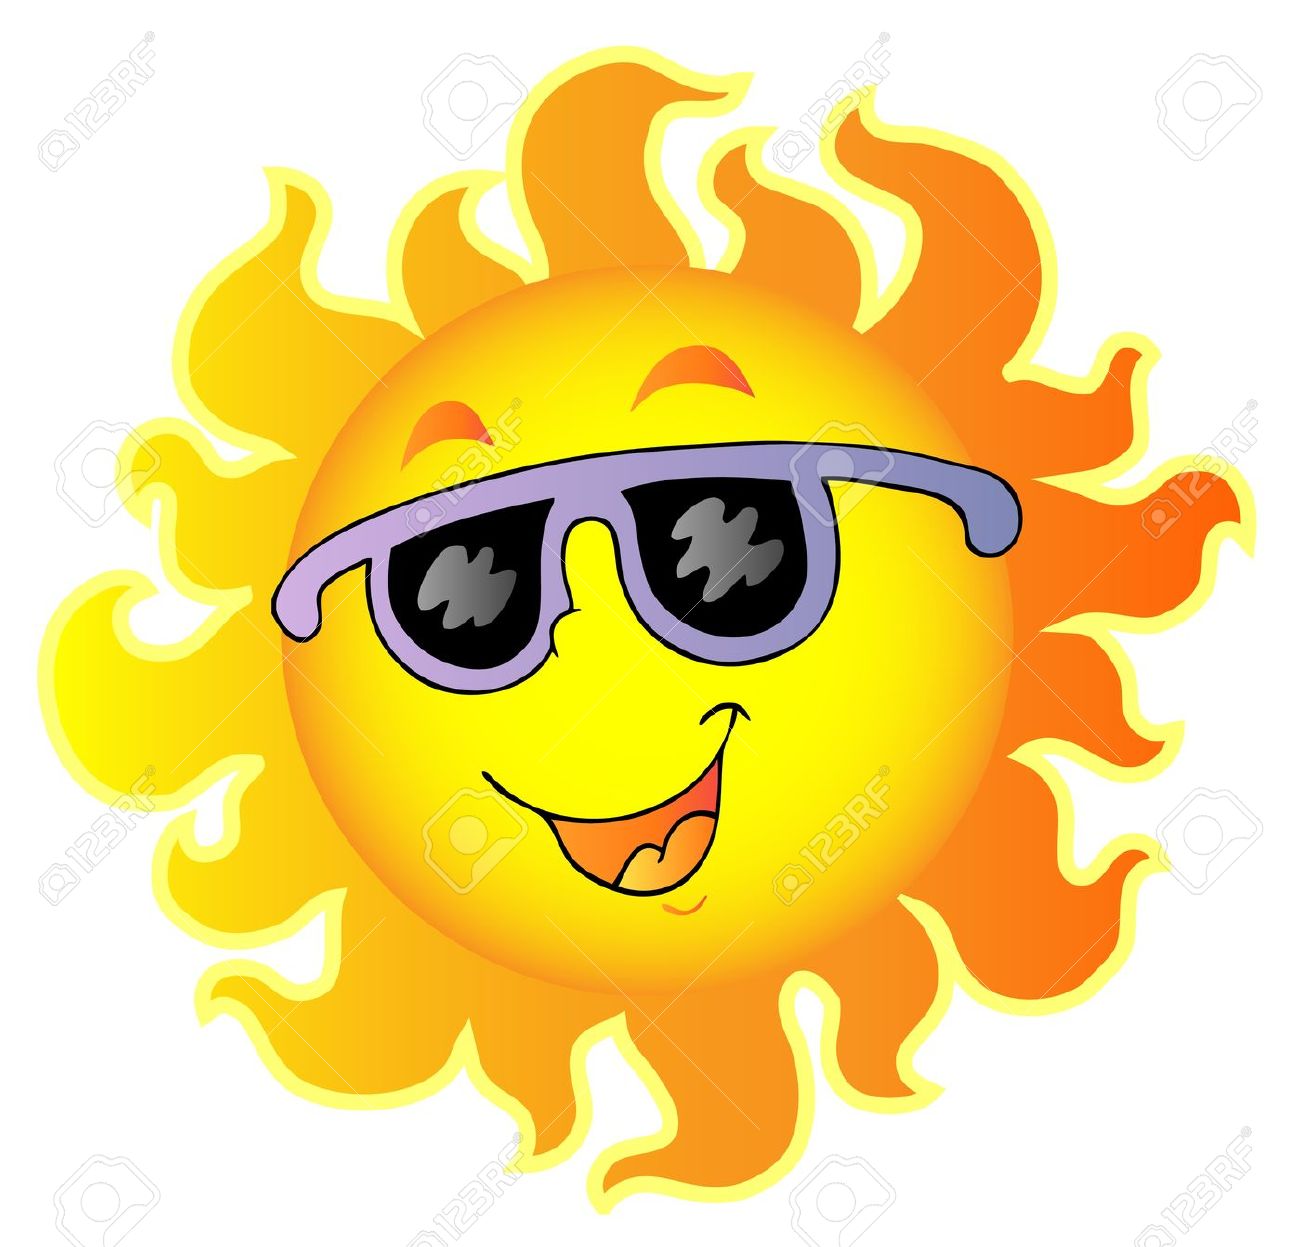 Happy Sun with sunglasses Stock Vector - 8433508